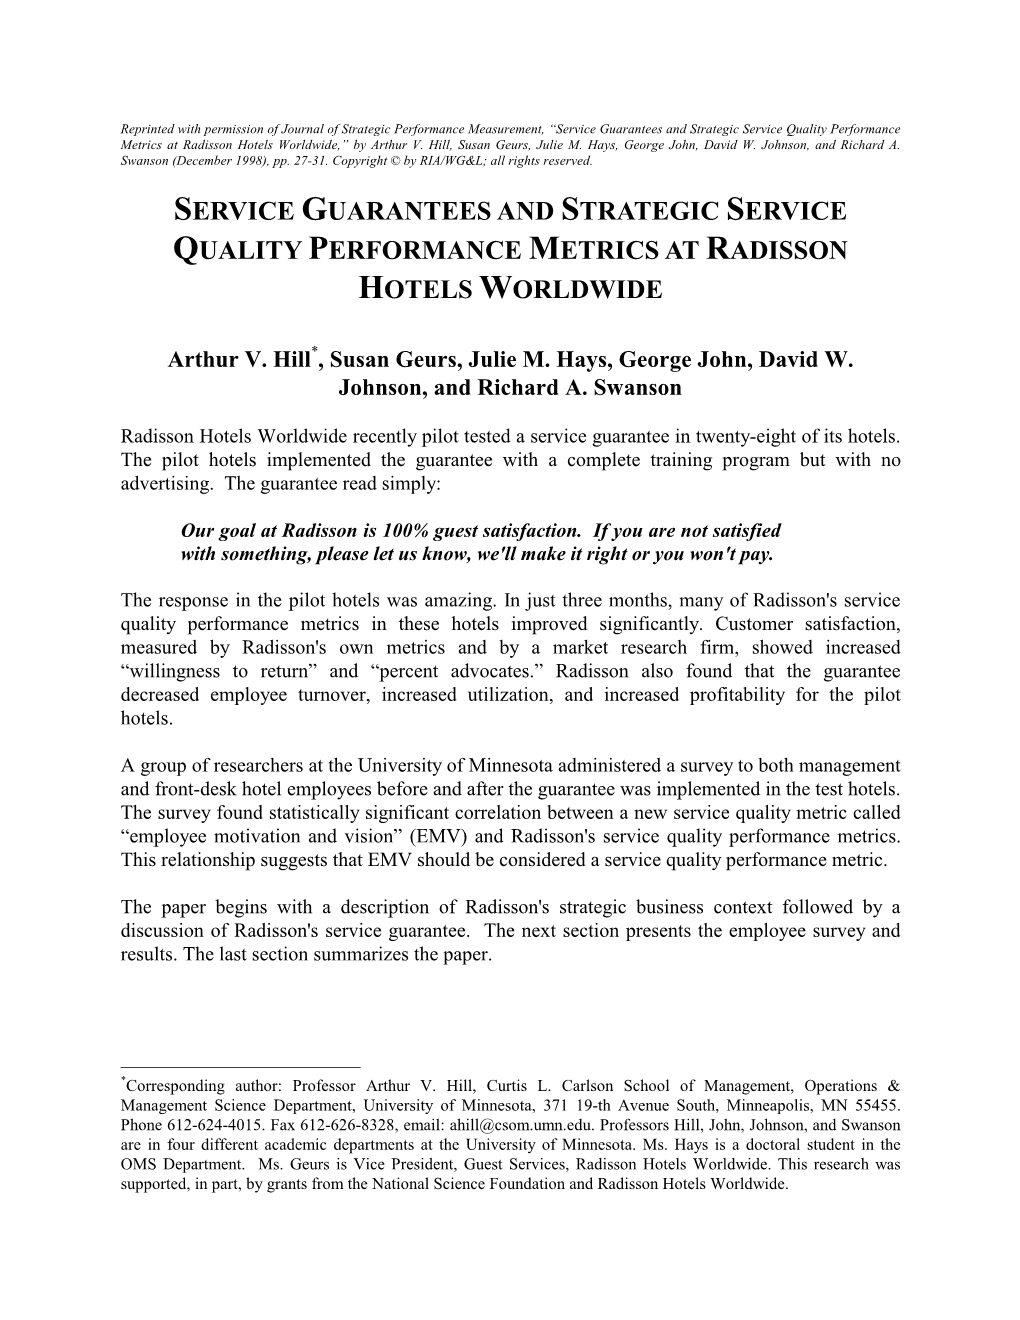 Service Guarantees and Strategic Service Quality Performance Metrics at Radisson Hotels Worldwide,” by Arthur V